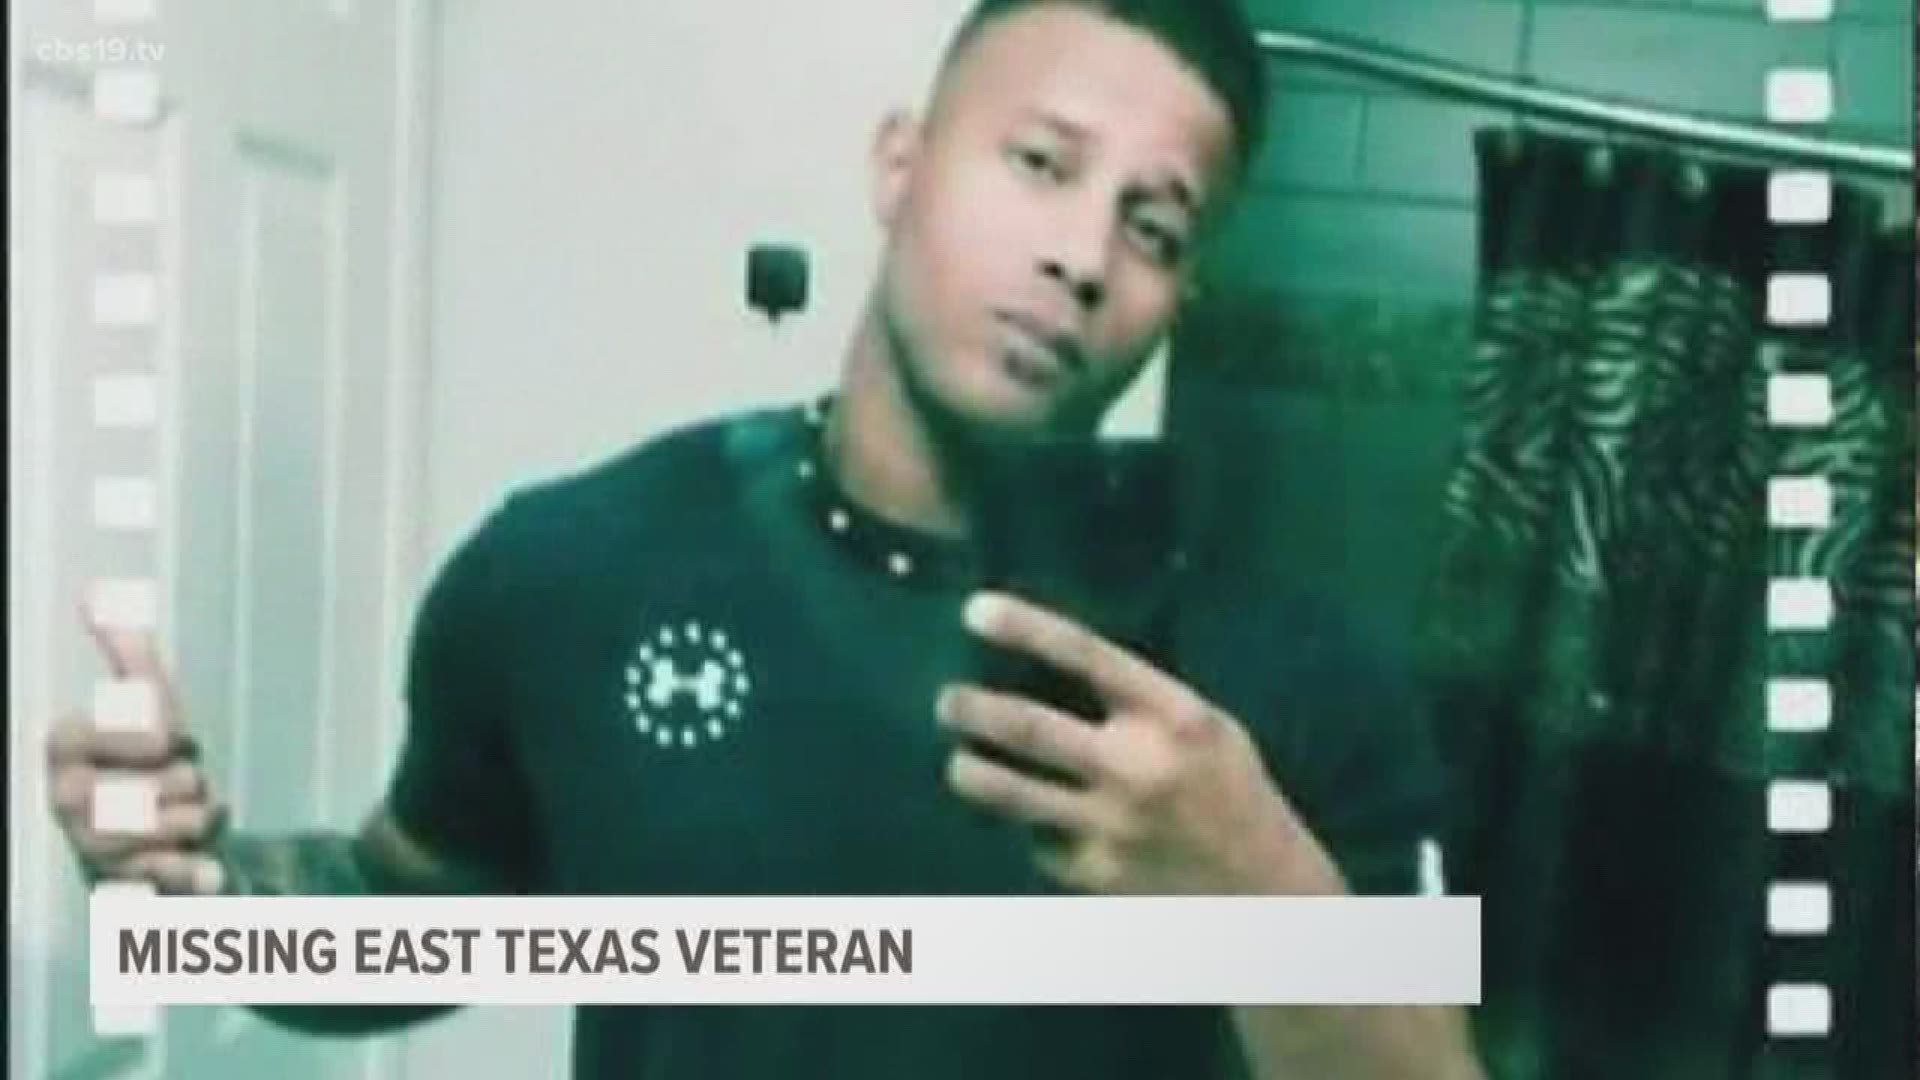 Terrell Martin, a missing East Texas veteran was last seen in Beaumont, Texas.